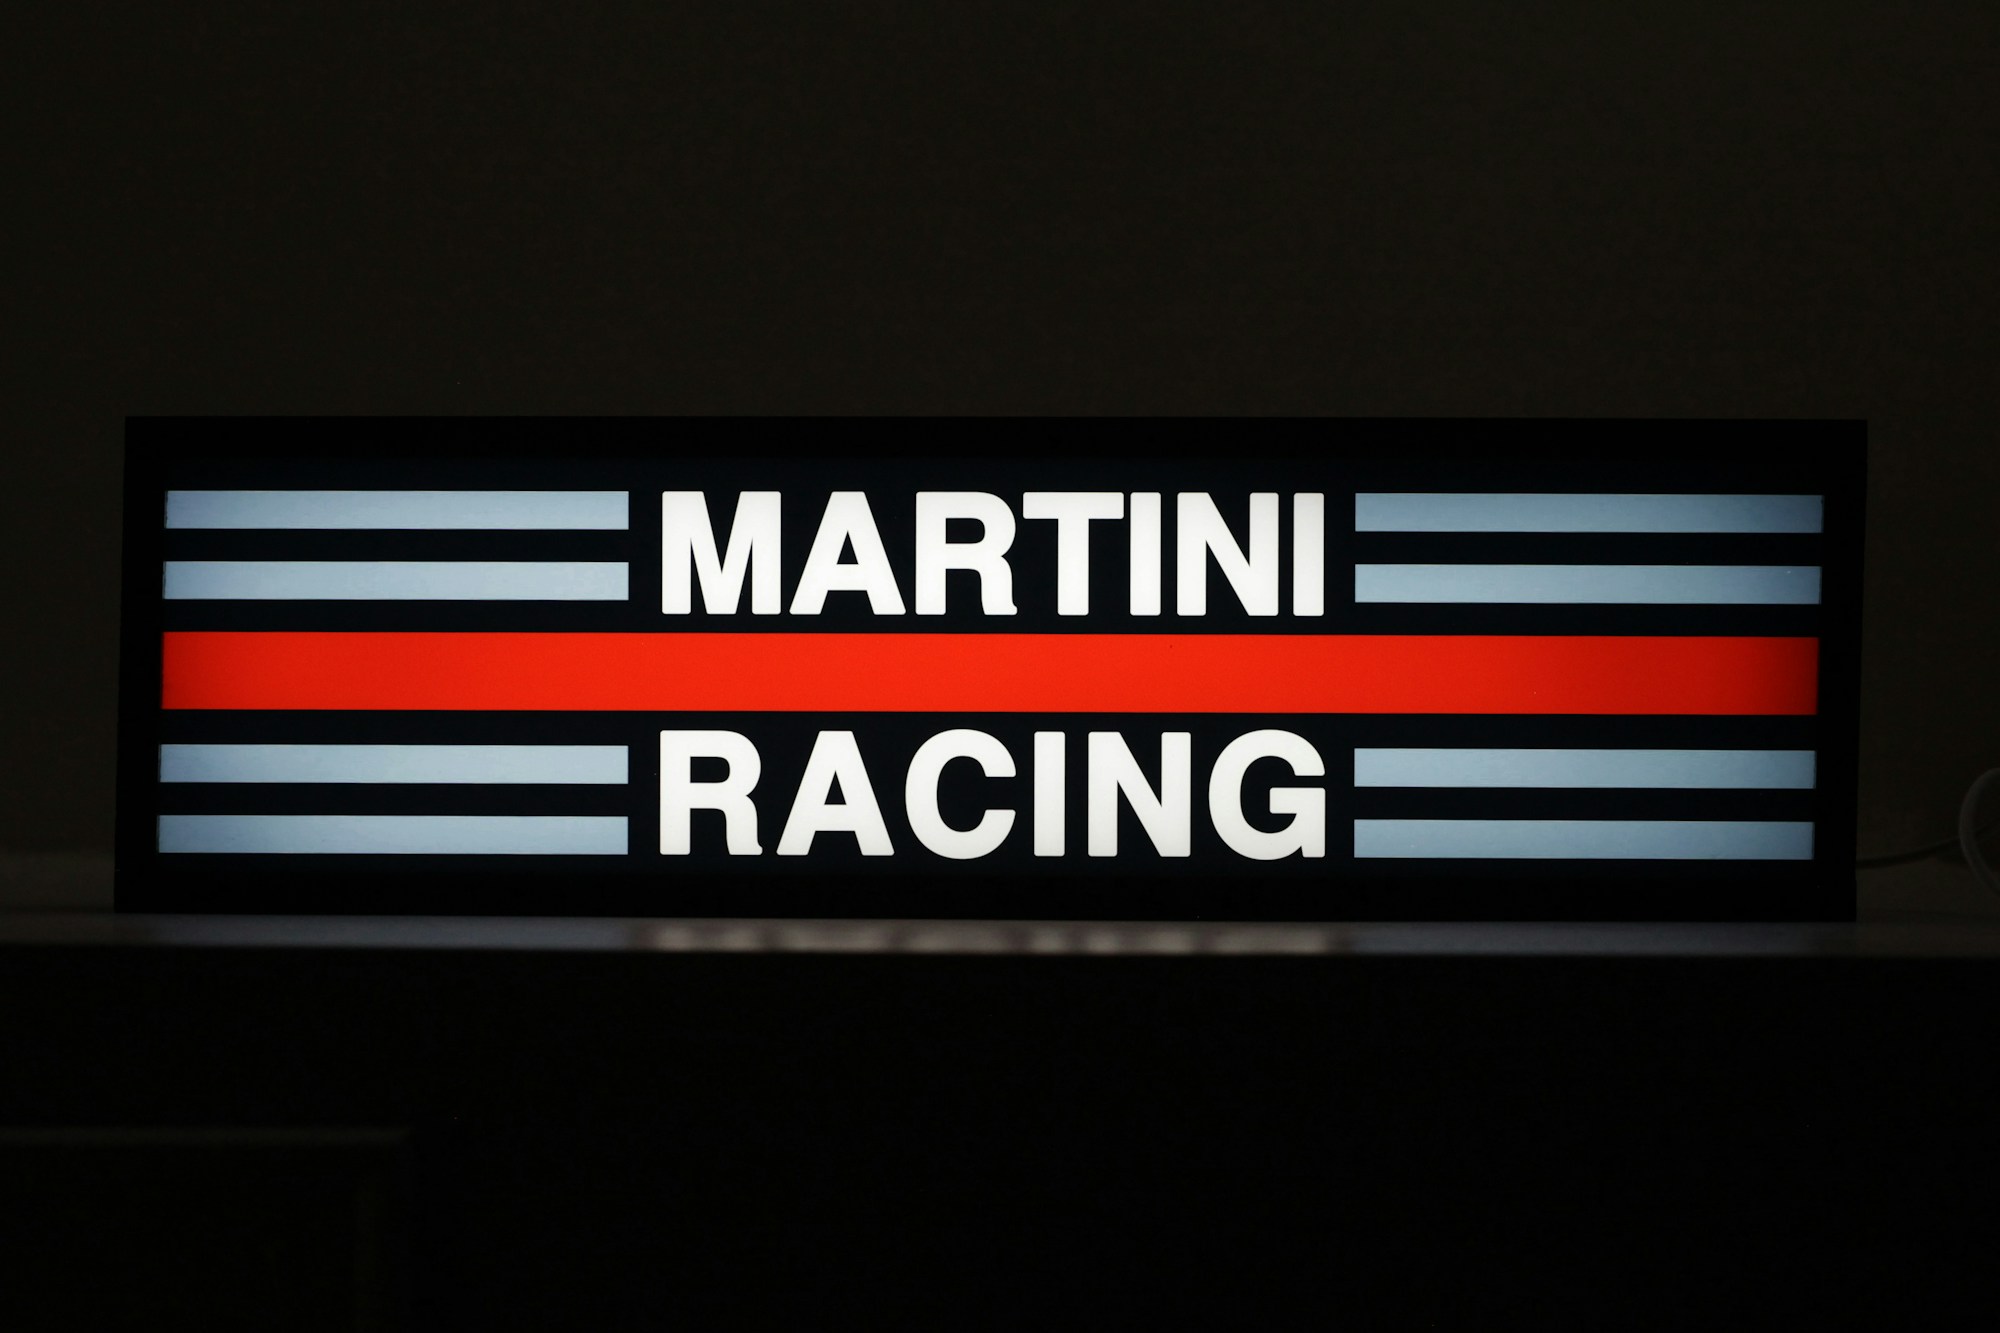 Martini racing, Martini, Car logos